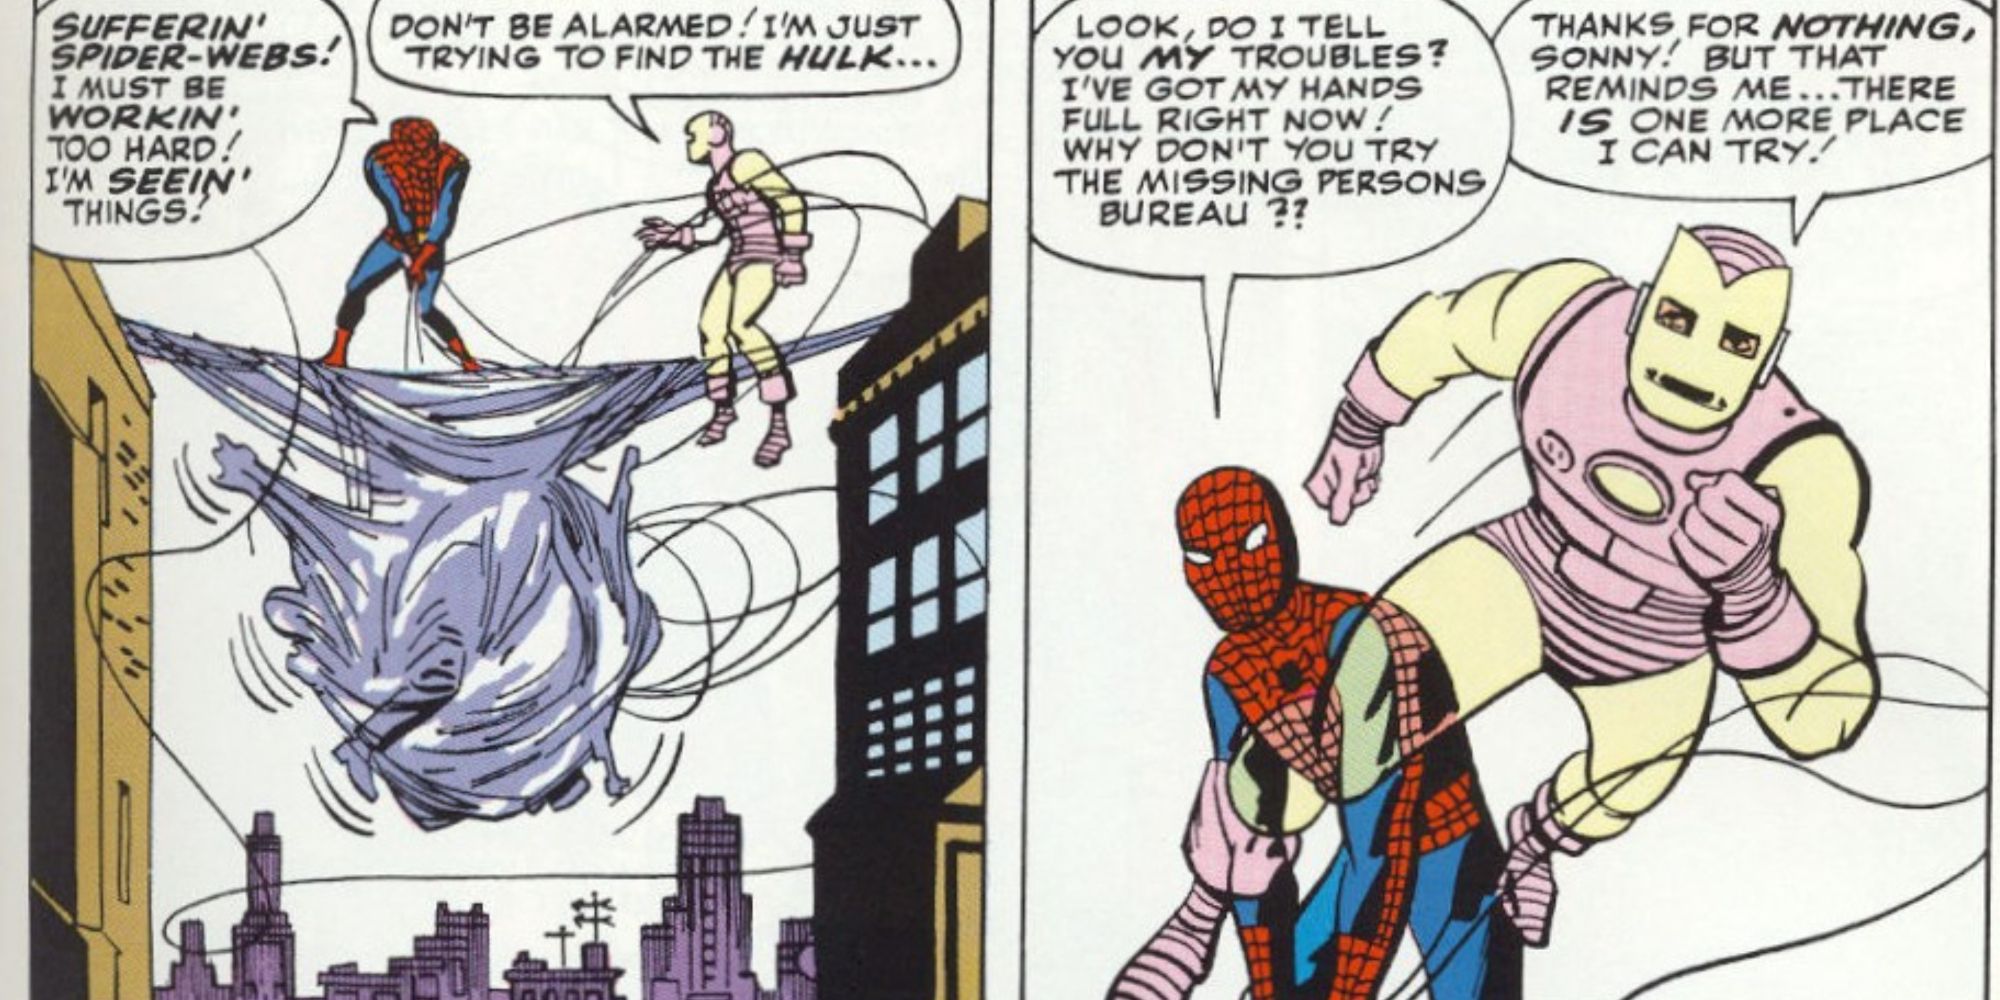 Spider-Man meets Iron Man in Marvel Comics.